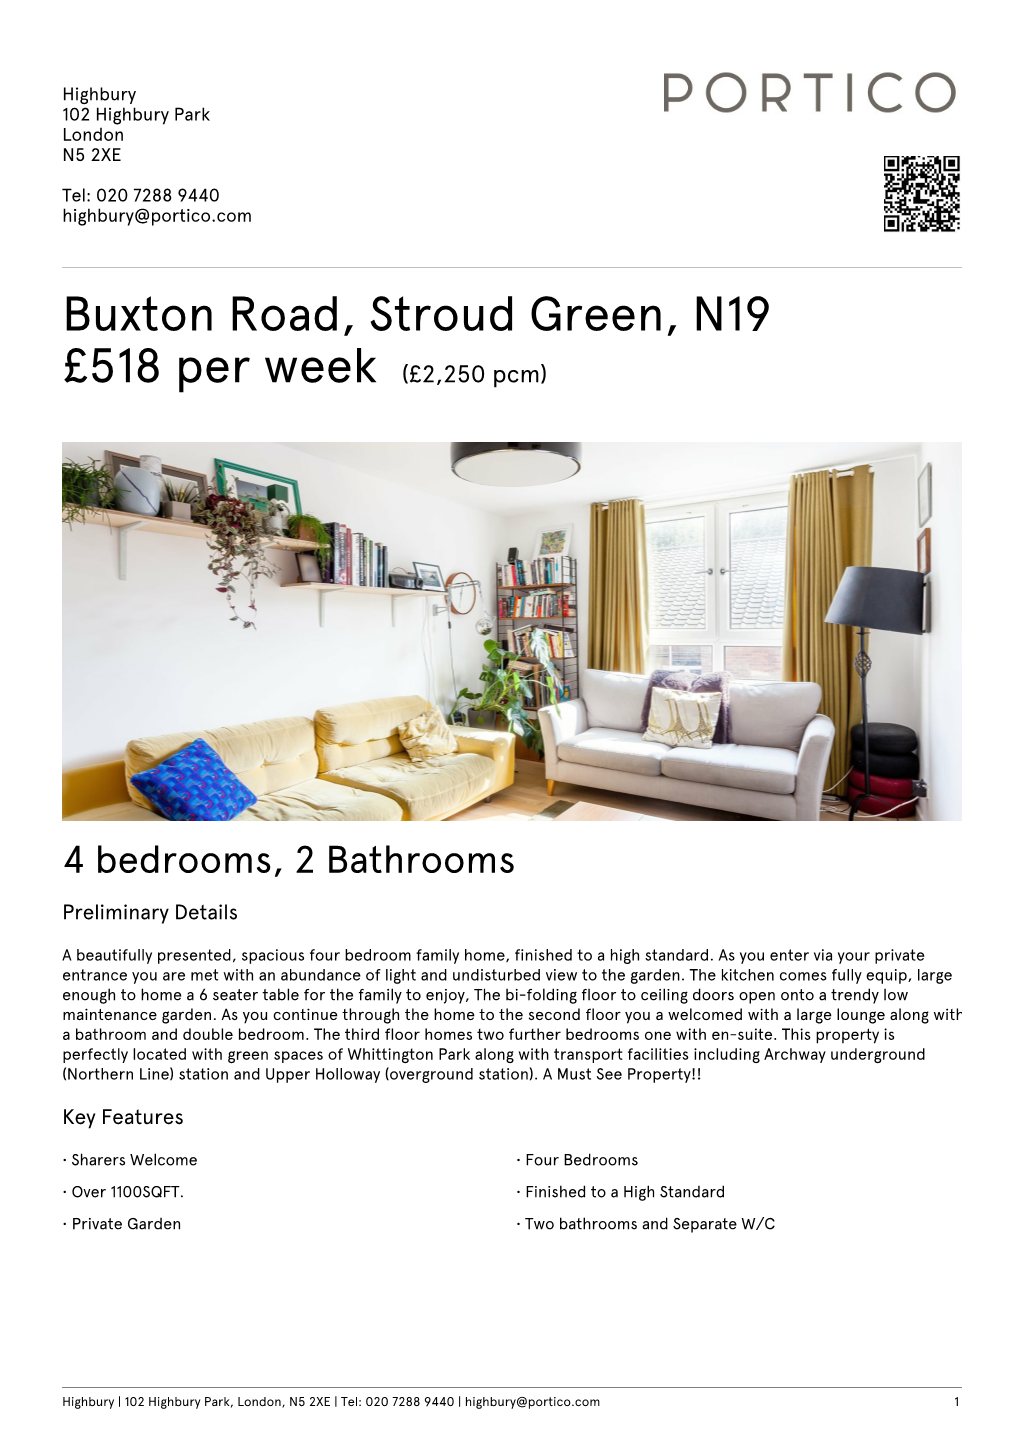 Buxton Road, Stroud Green, N19 £518 Per Week